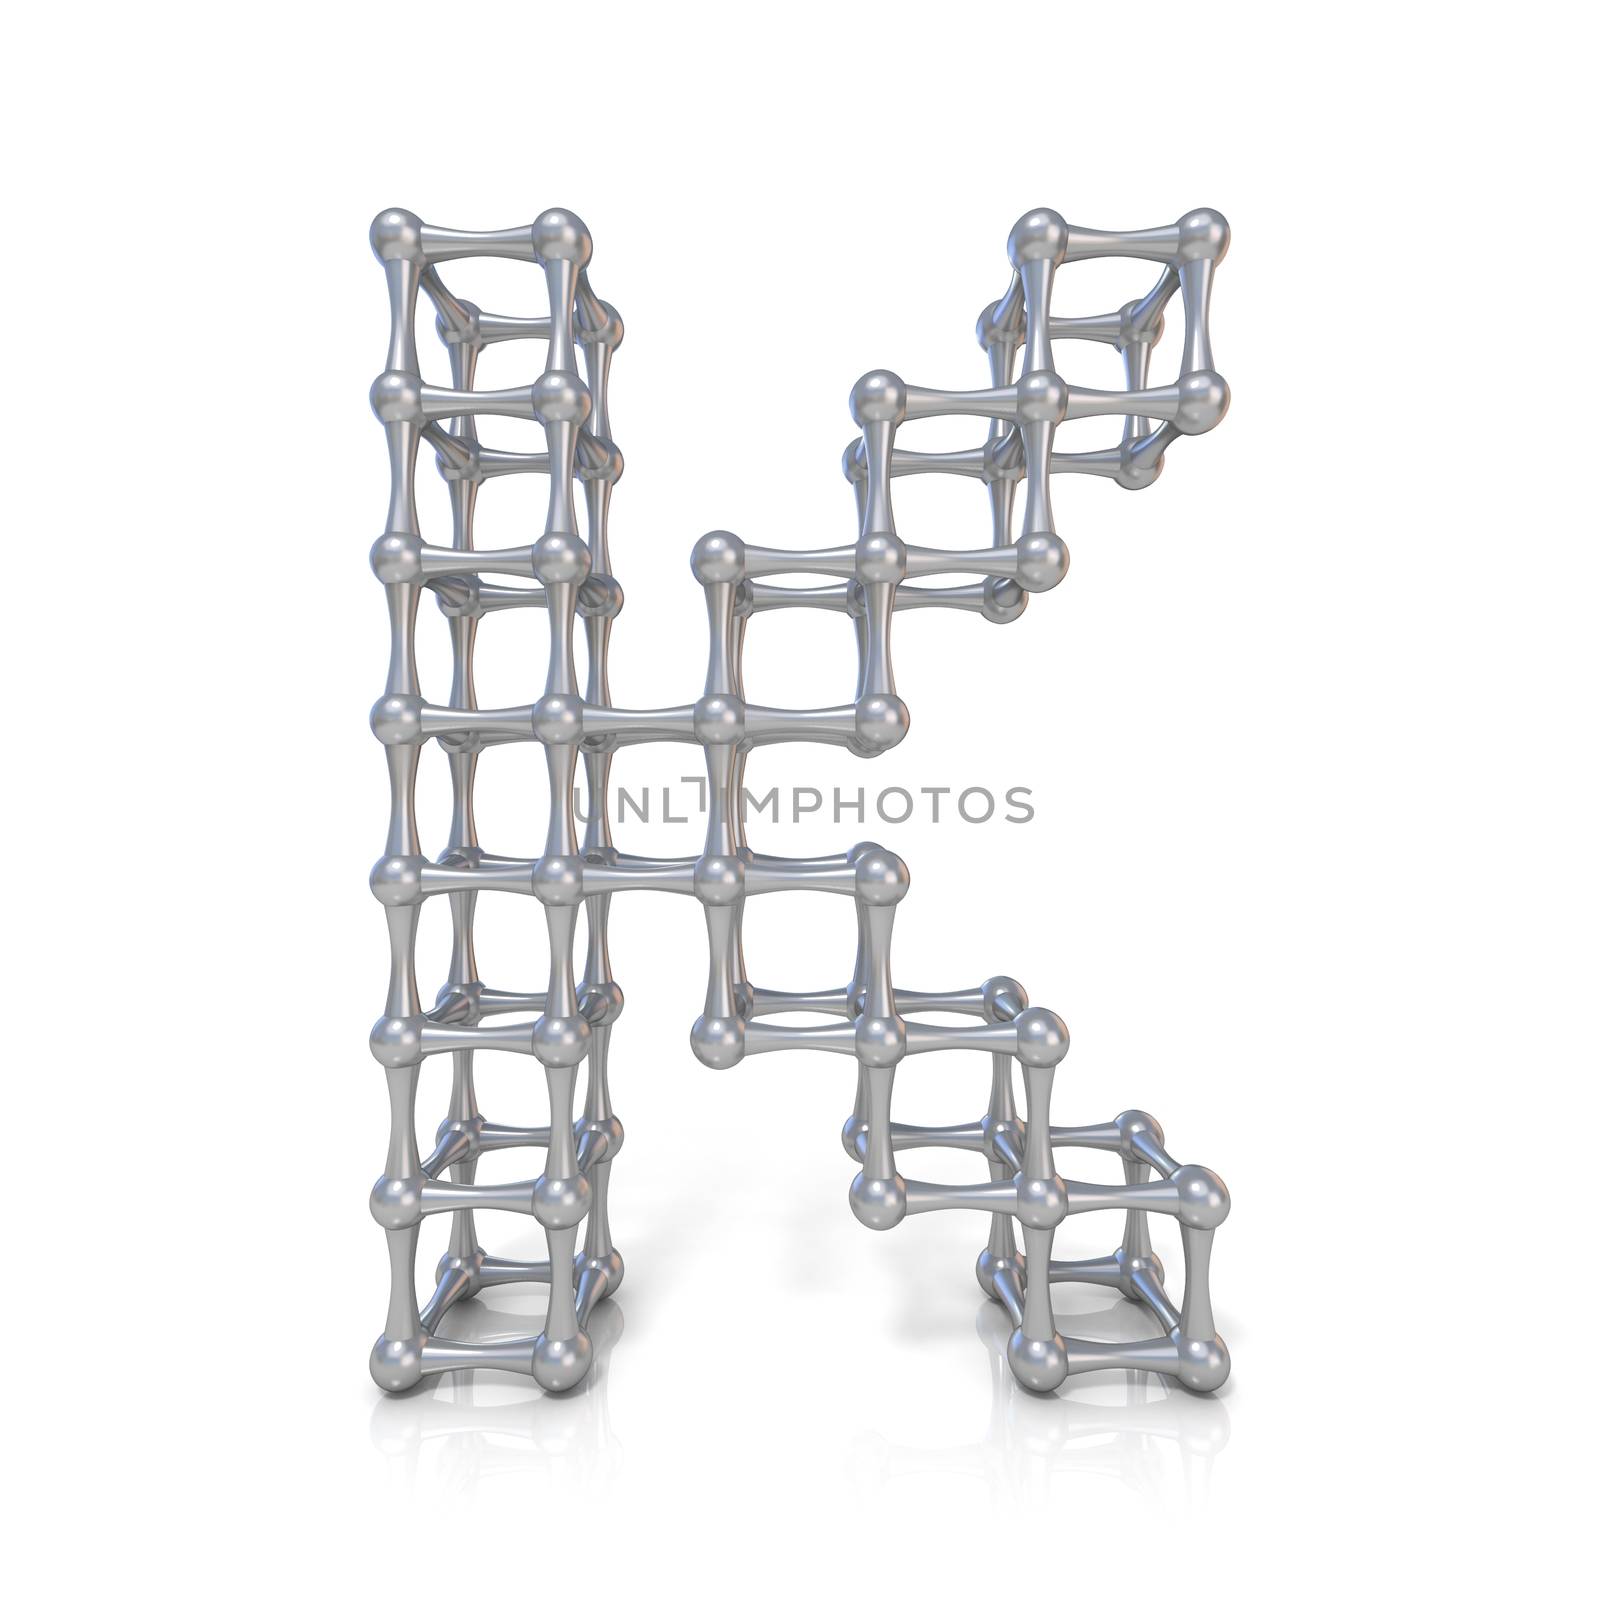 Metal lattice font letter K 3D render illustration isolated on white background